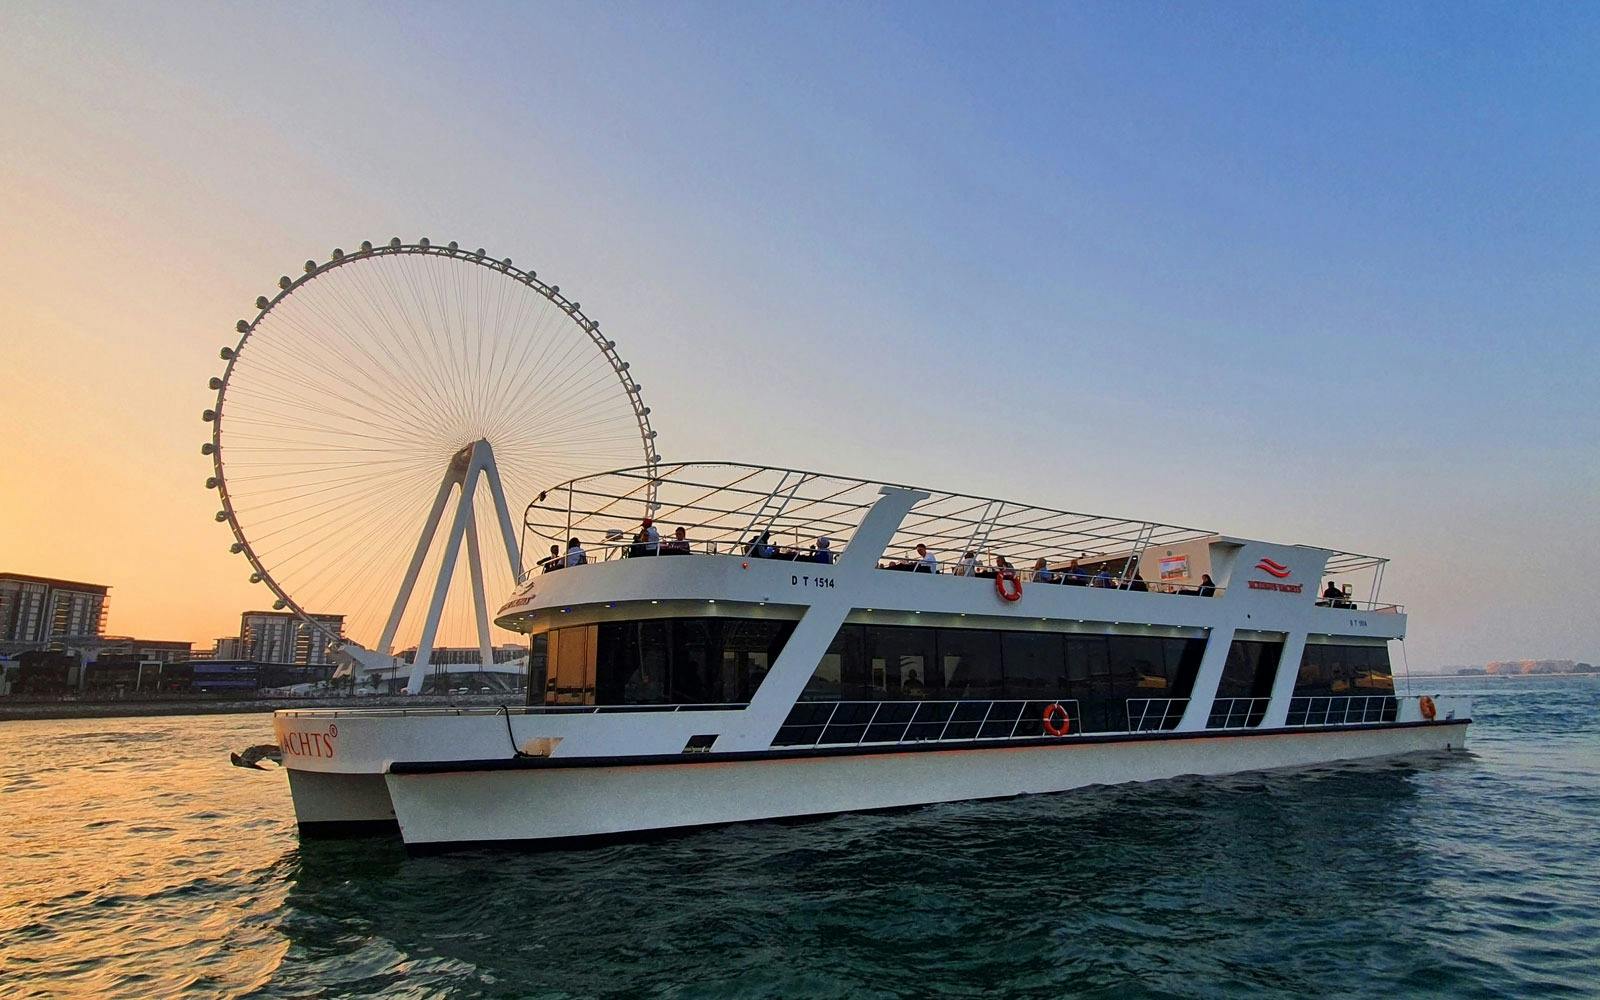 Cruise bij zonsondergang in de Dubai Marina